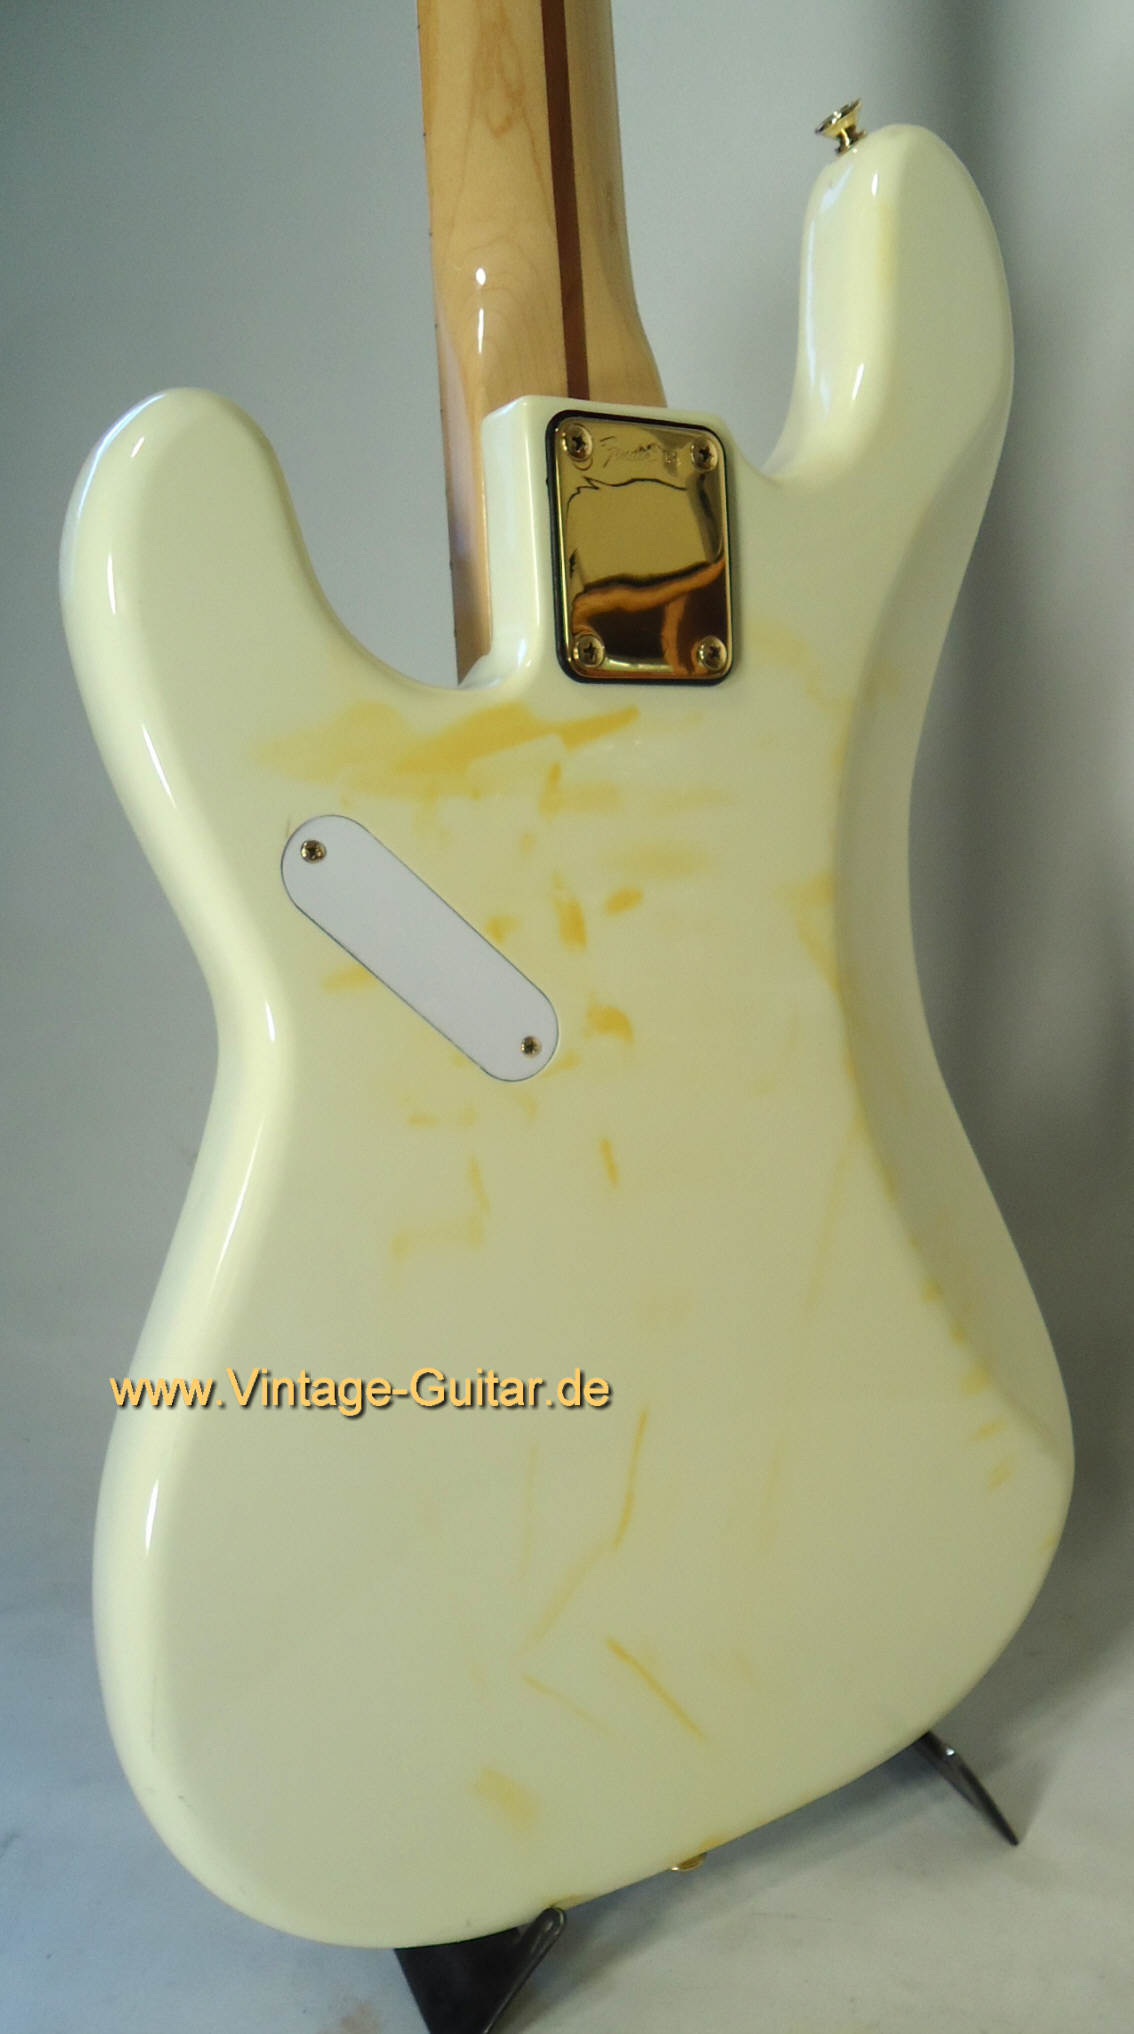 Fender-Precision-Special-1982-white-body-d.jpg